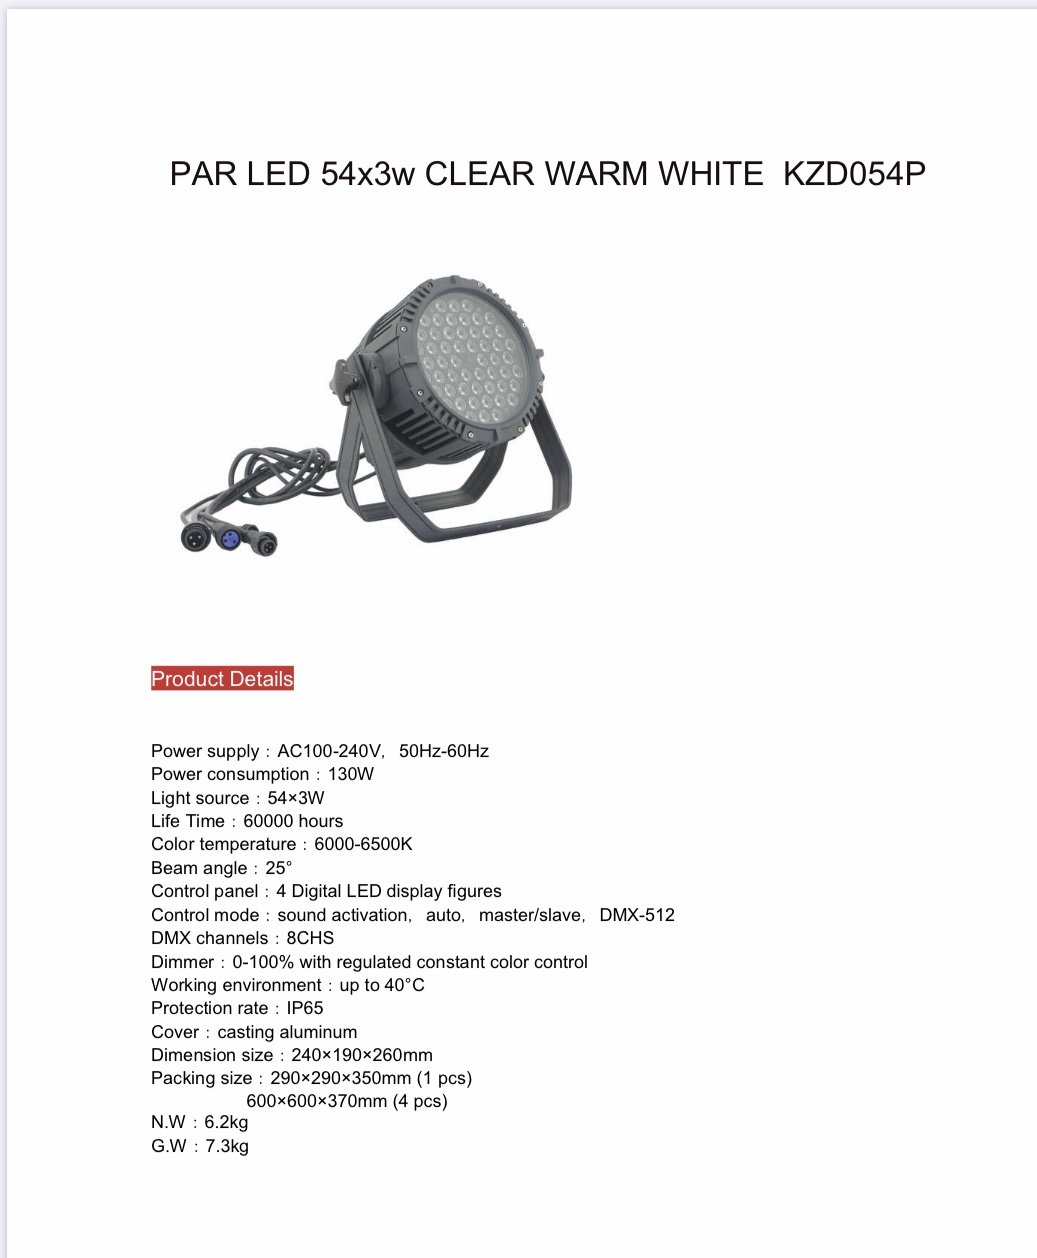 PAR LED 54x3w Waterproof WARM WHITE